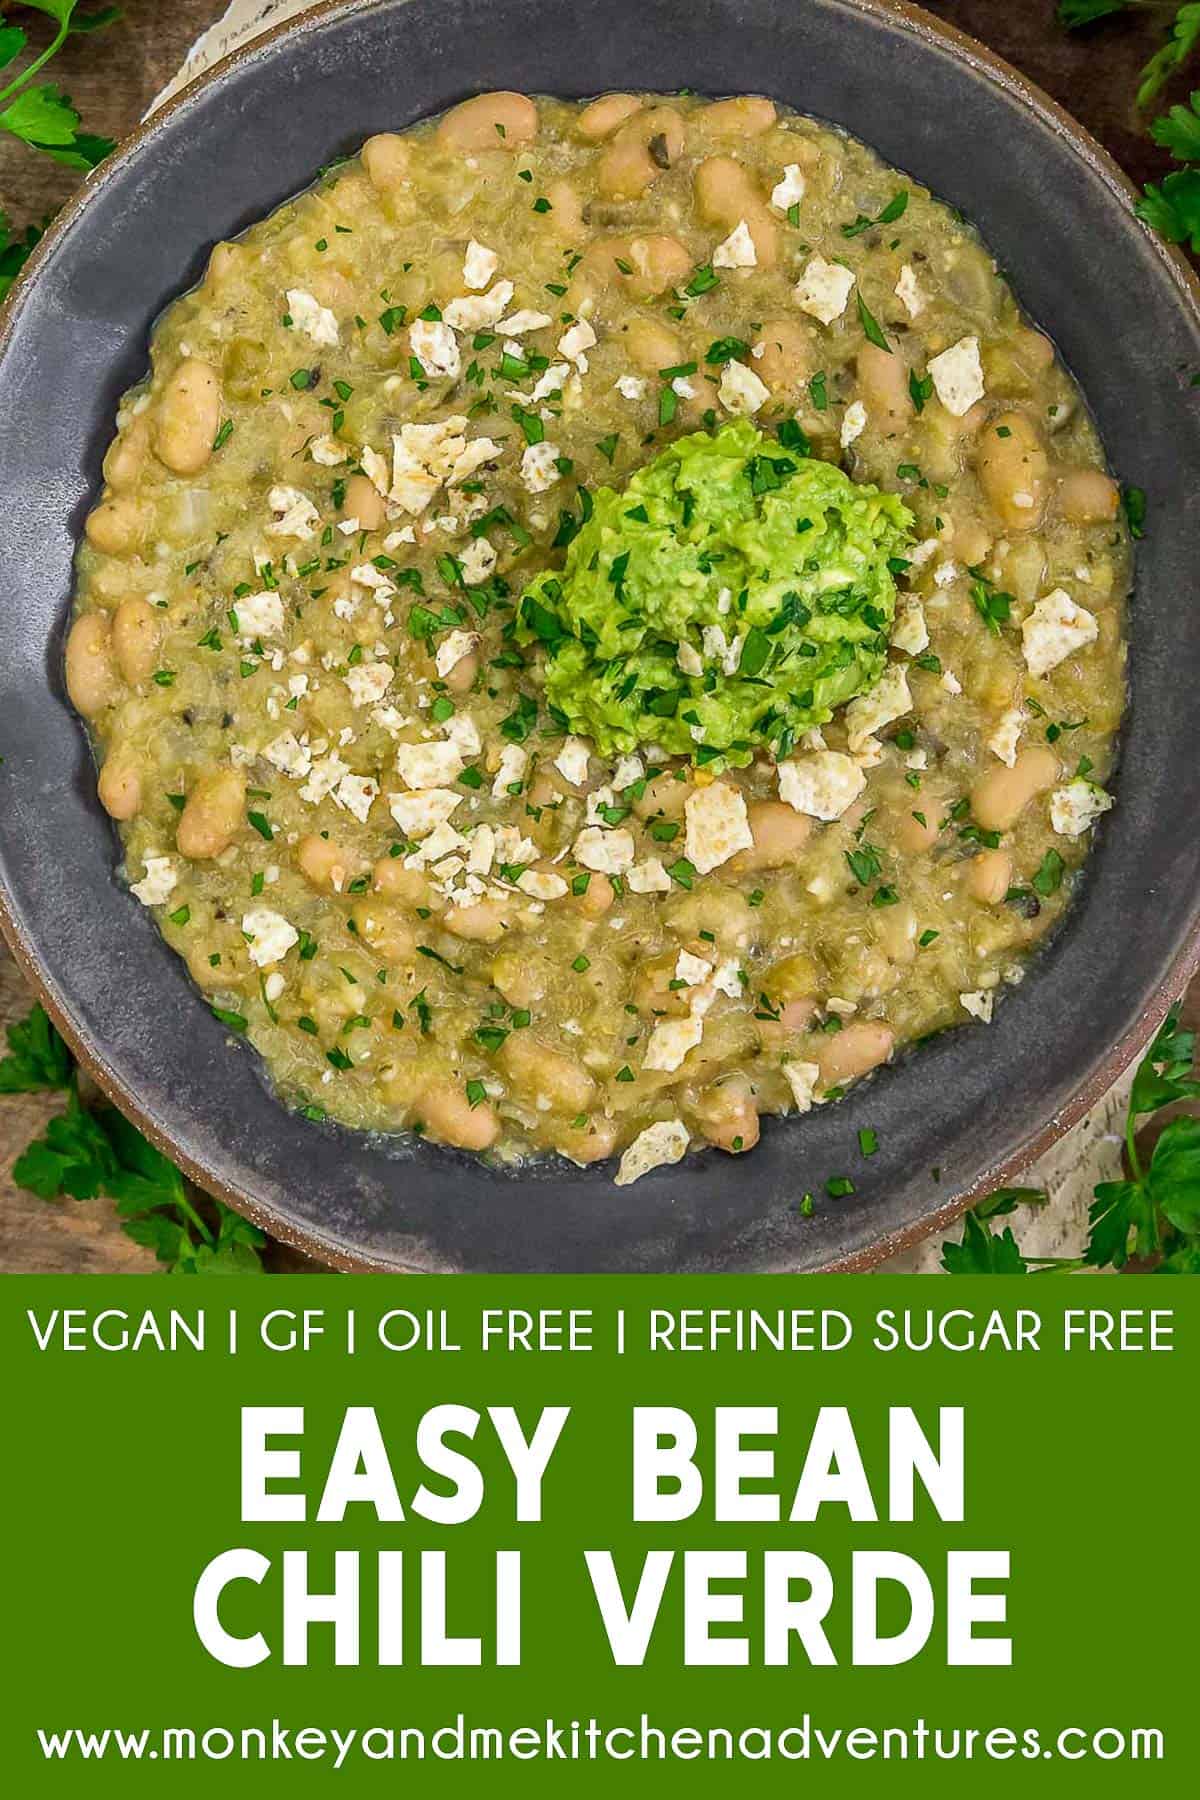 Easy Bean Chili Verde with text description